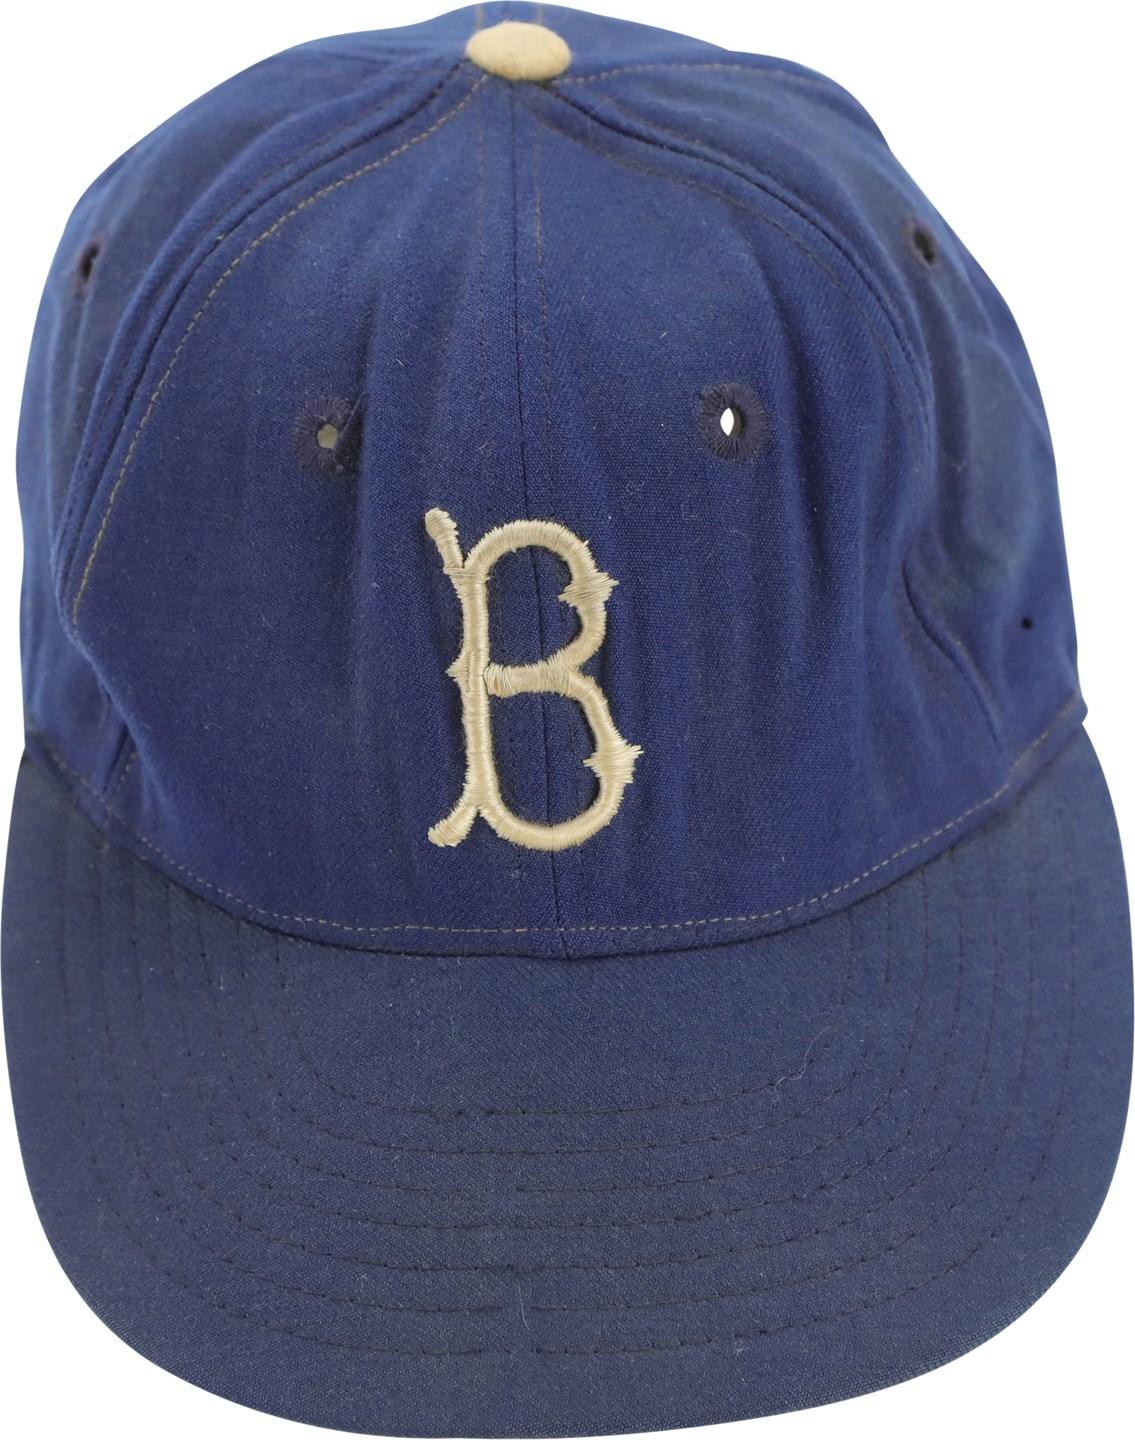 Baseball Equipment - 1950s Roy Campanella Brooklyn Dodgers Game Worn Hat